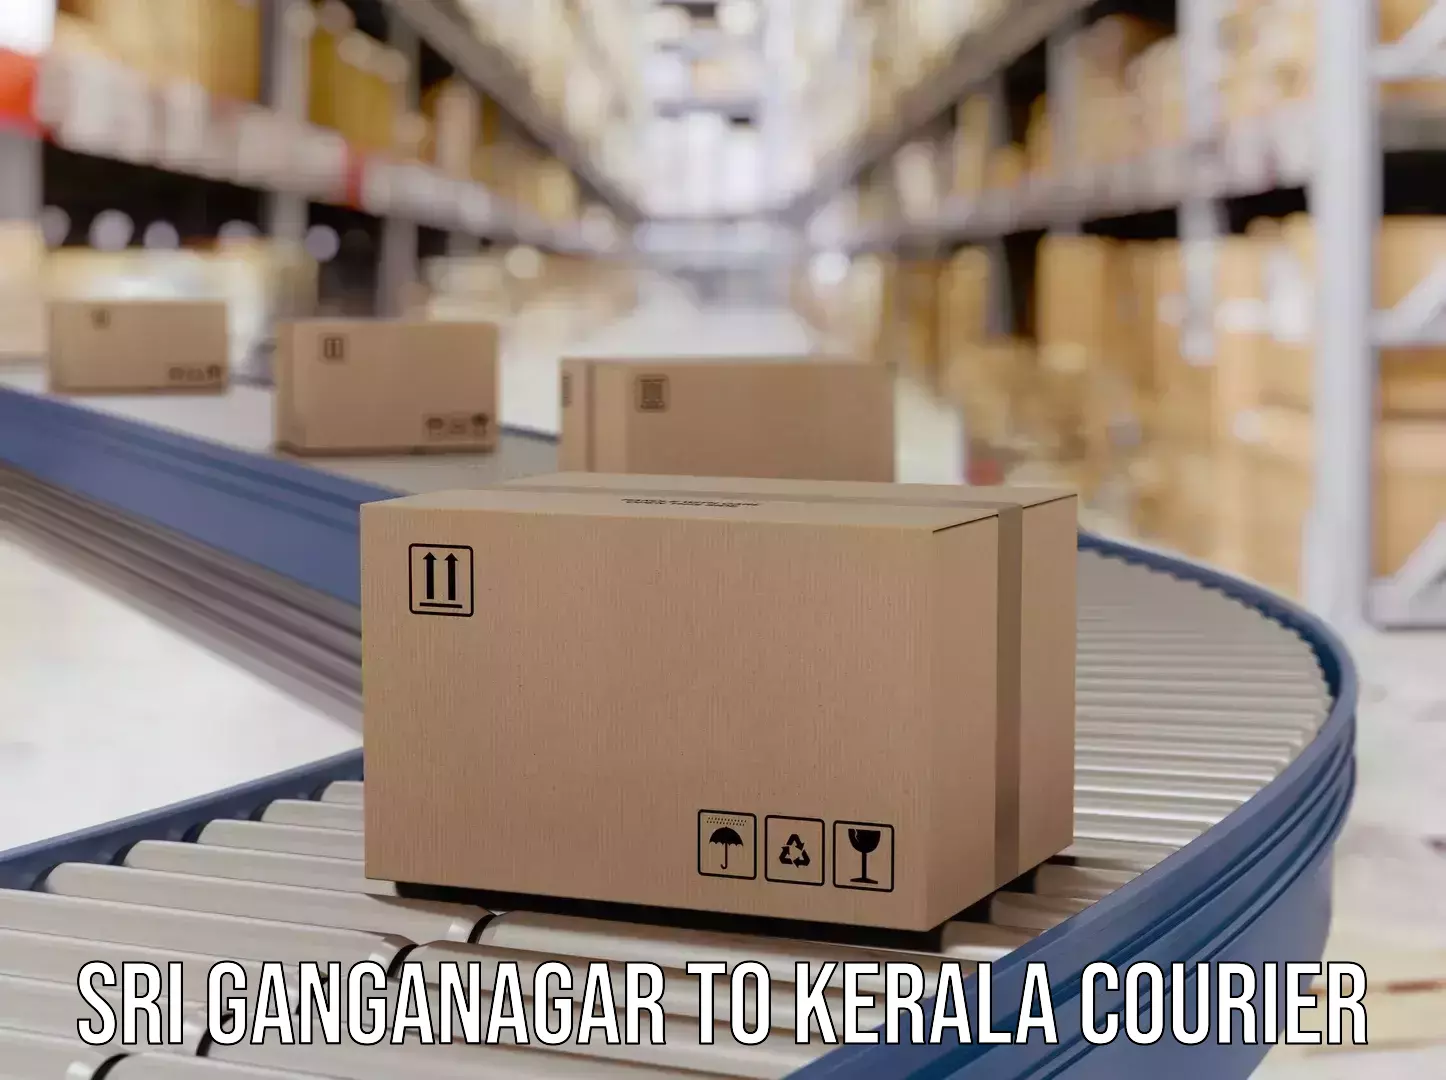 User-friendly courier app Sri Ganganagar to Akaloor